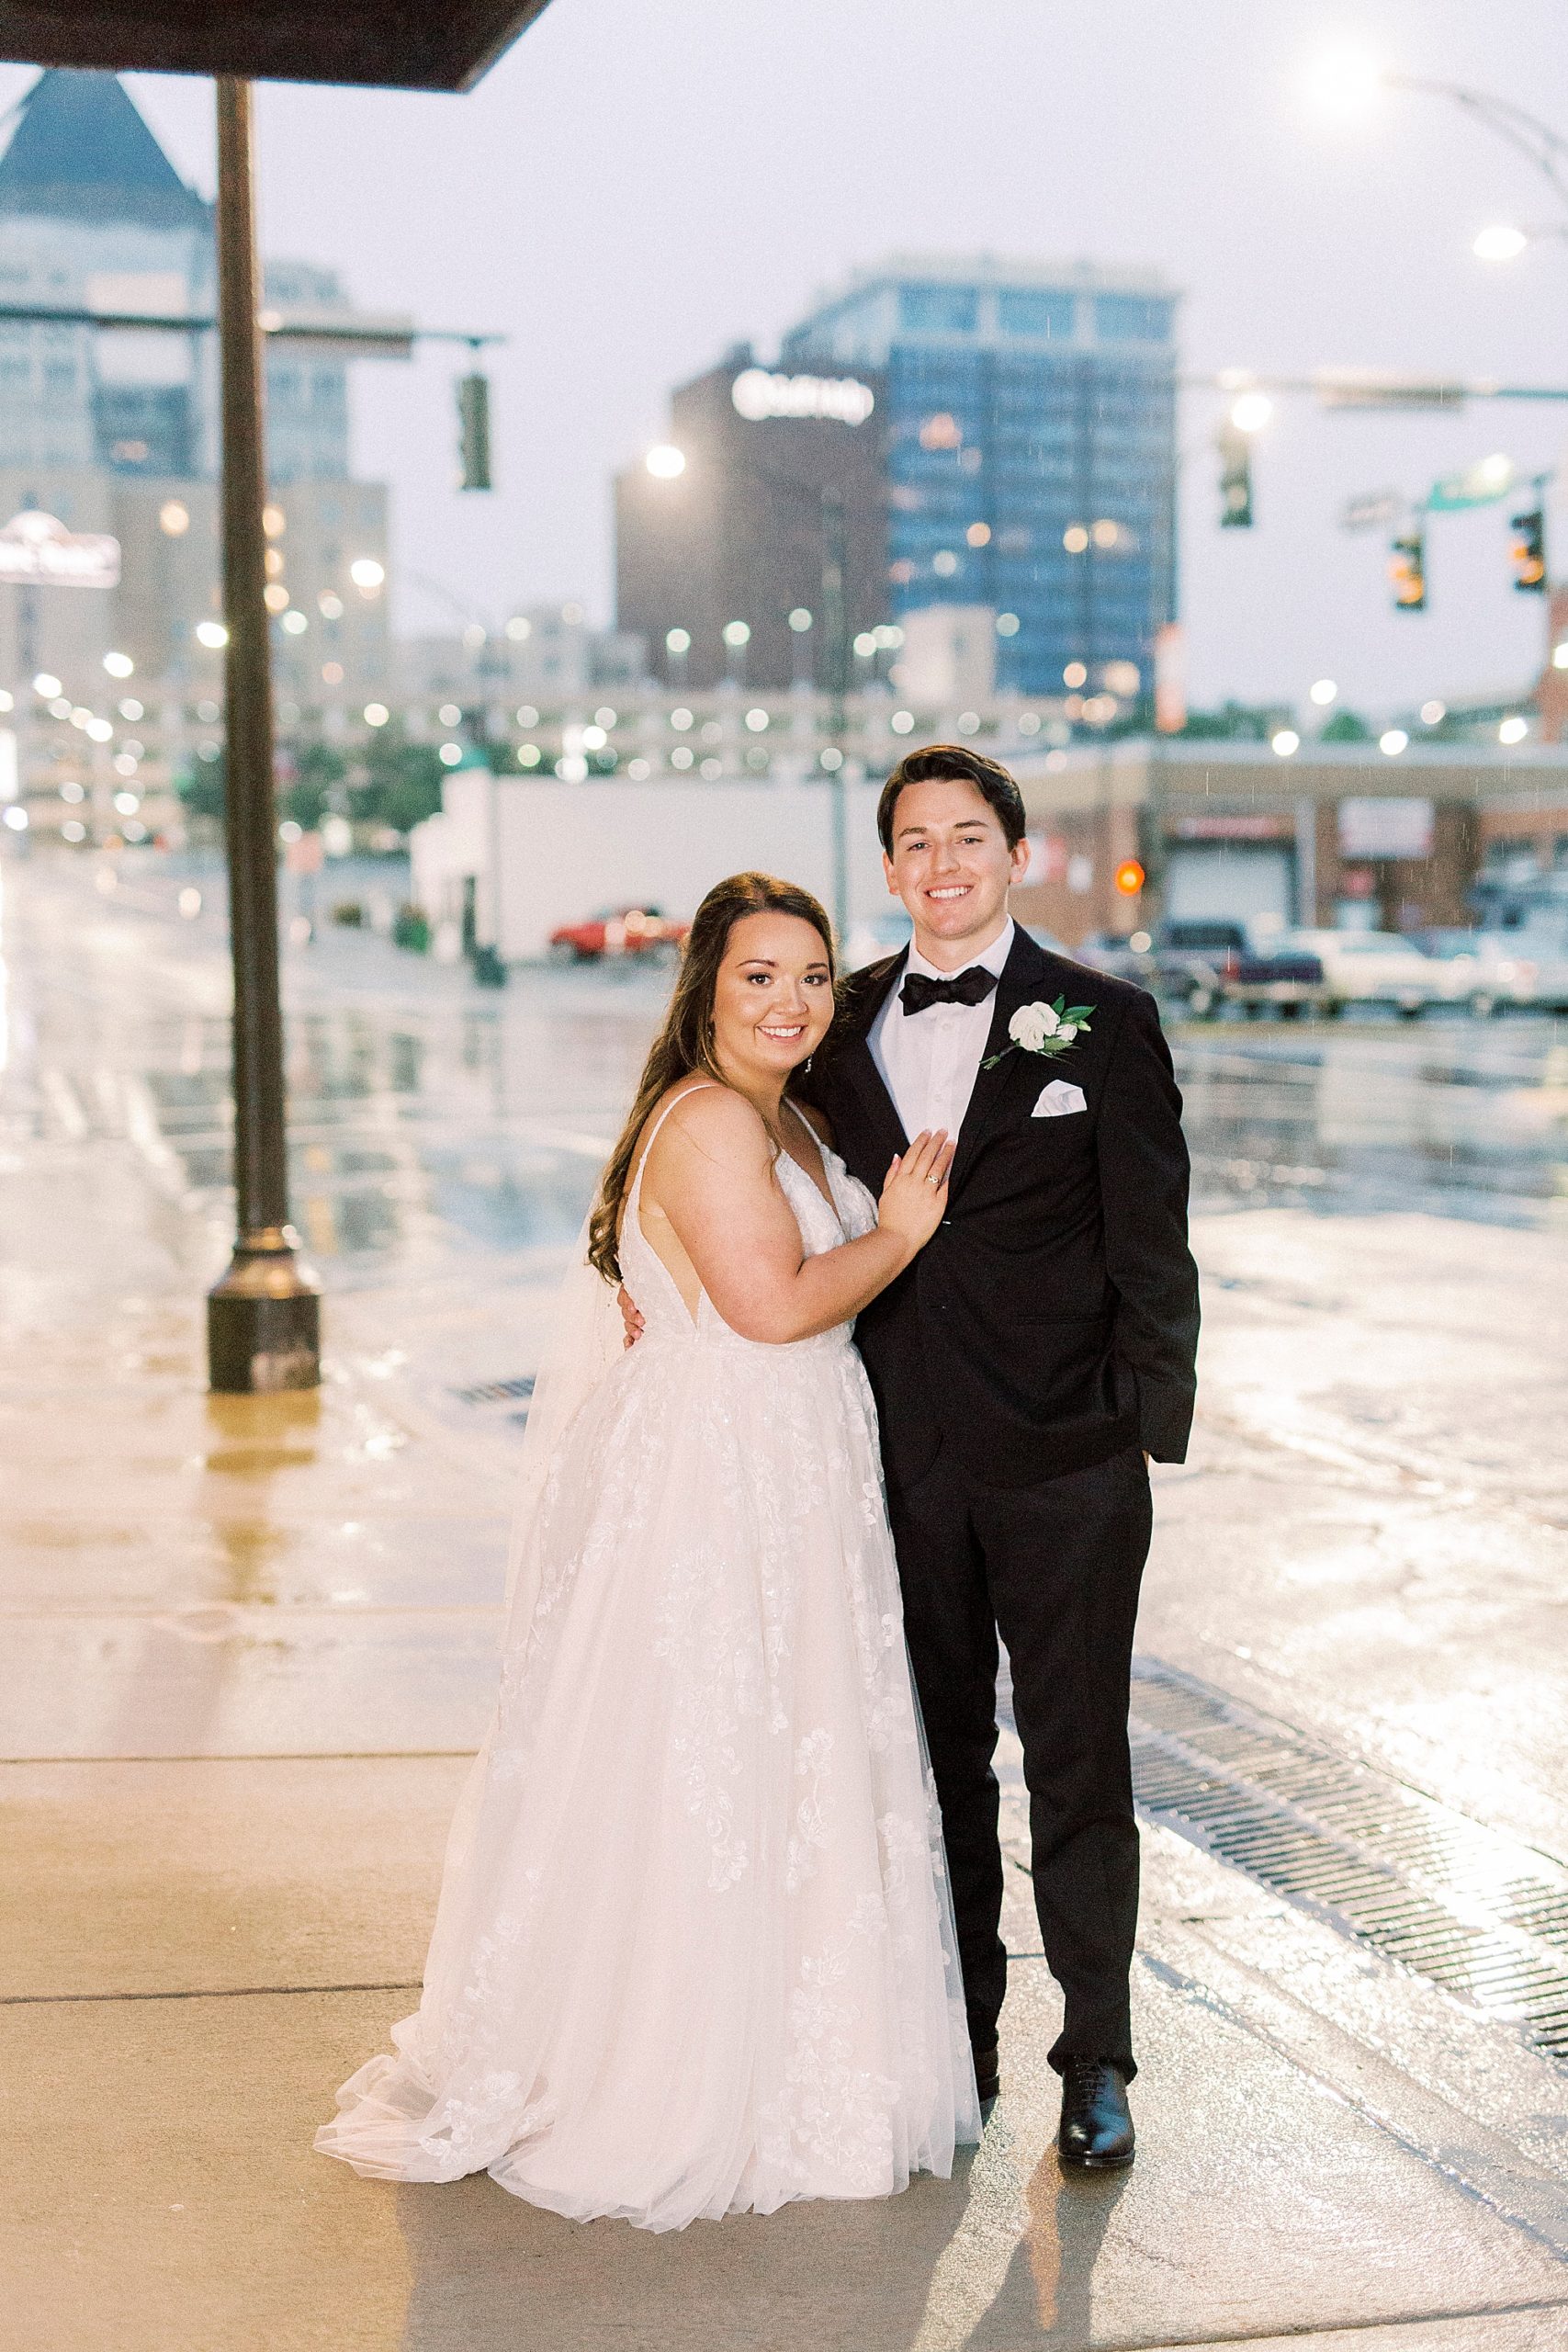 newlyweds pose on rainy street in Greensboro NC